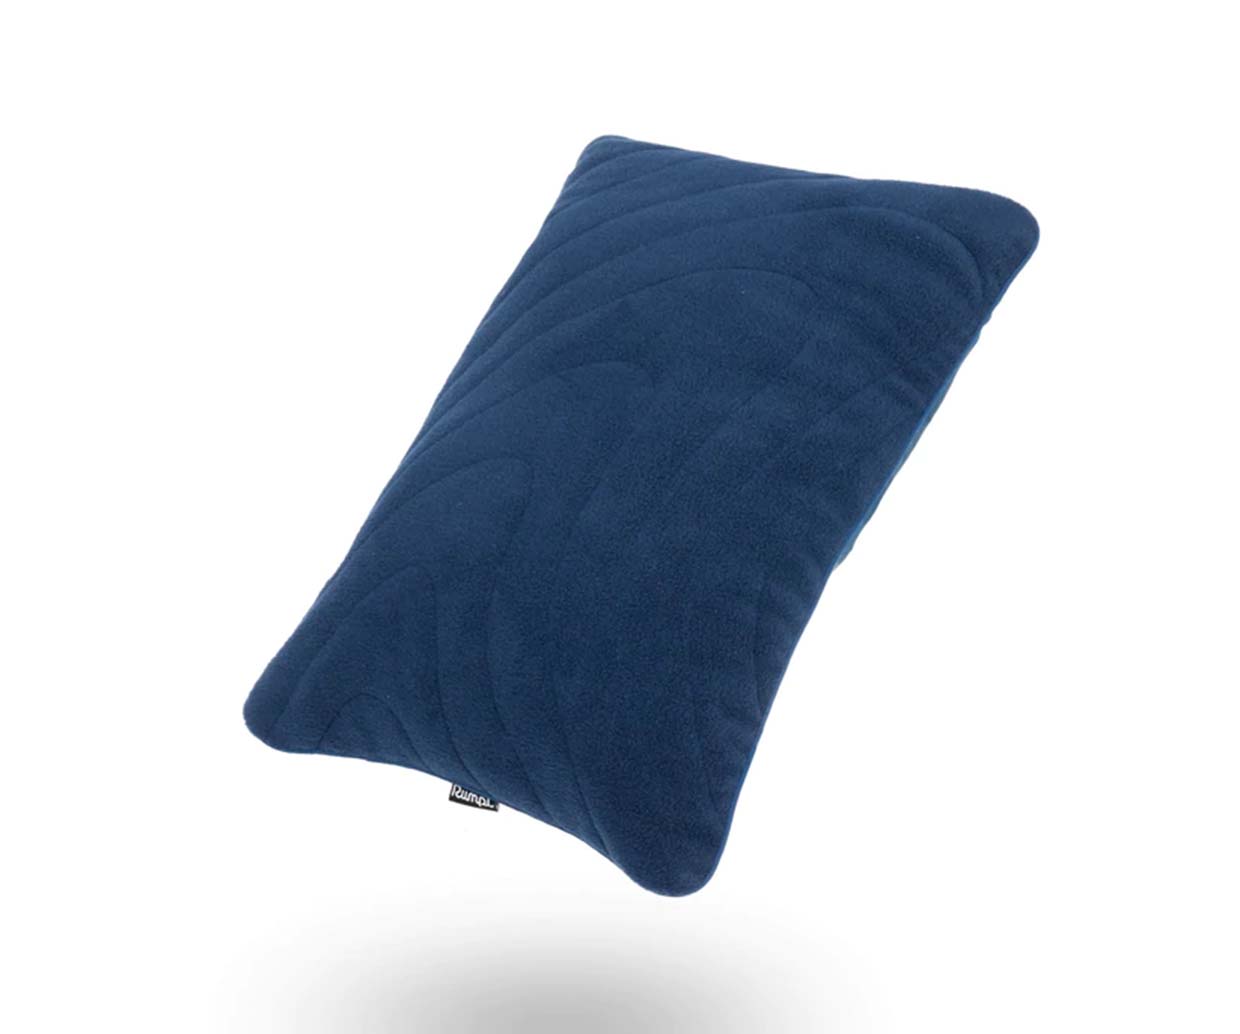 Rumpl Stuffable Pillowcase